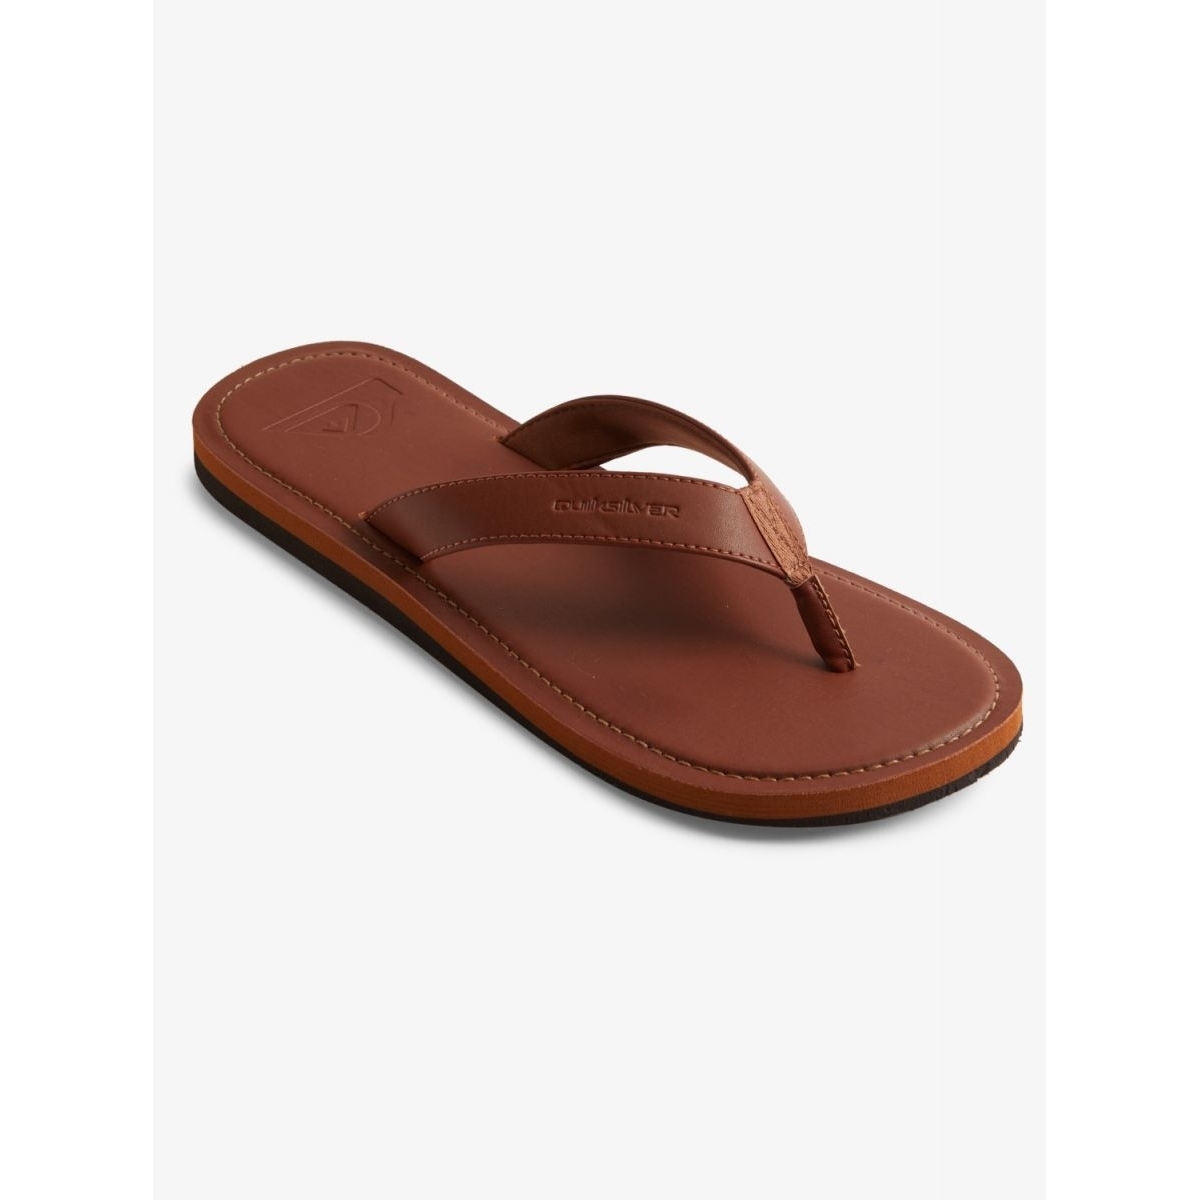 Quiksilver Men's Molokai Nubuck Flip Flop Sandals Tan Solid - AQYL100960-TKD0 TAN SOLID - TAN SOLID, 13